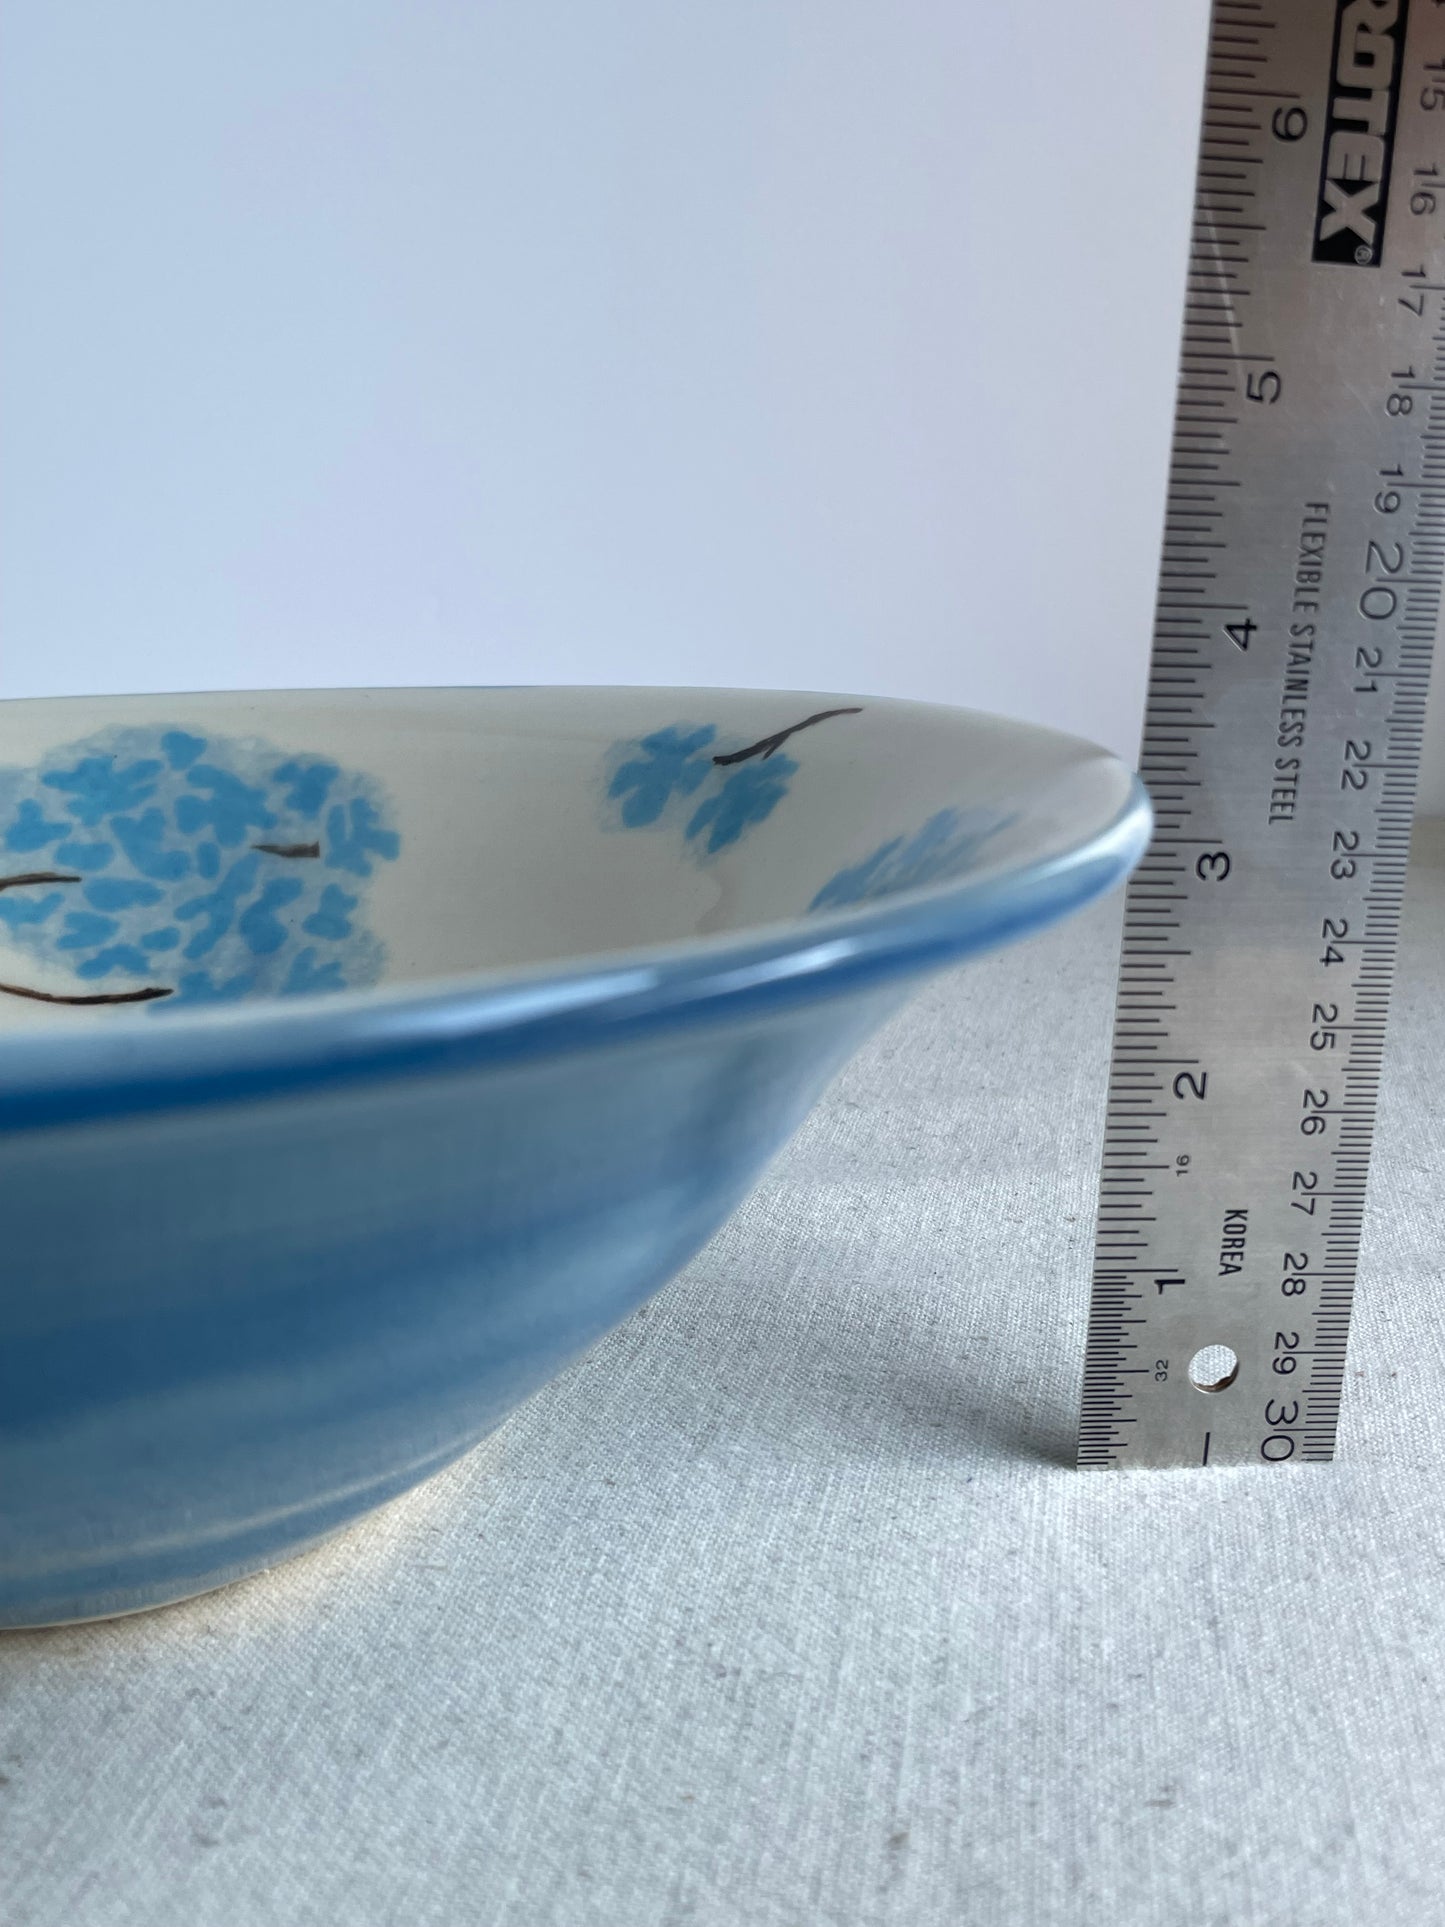 Blue Hydrangea Serving Bowl